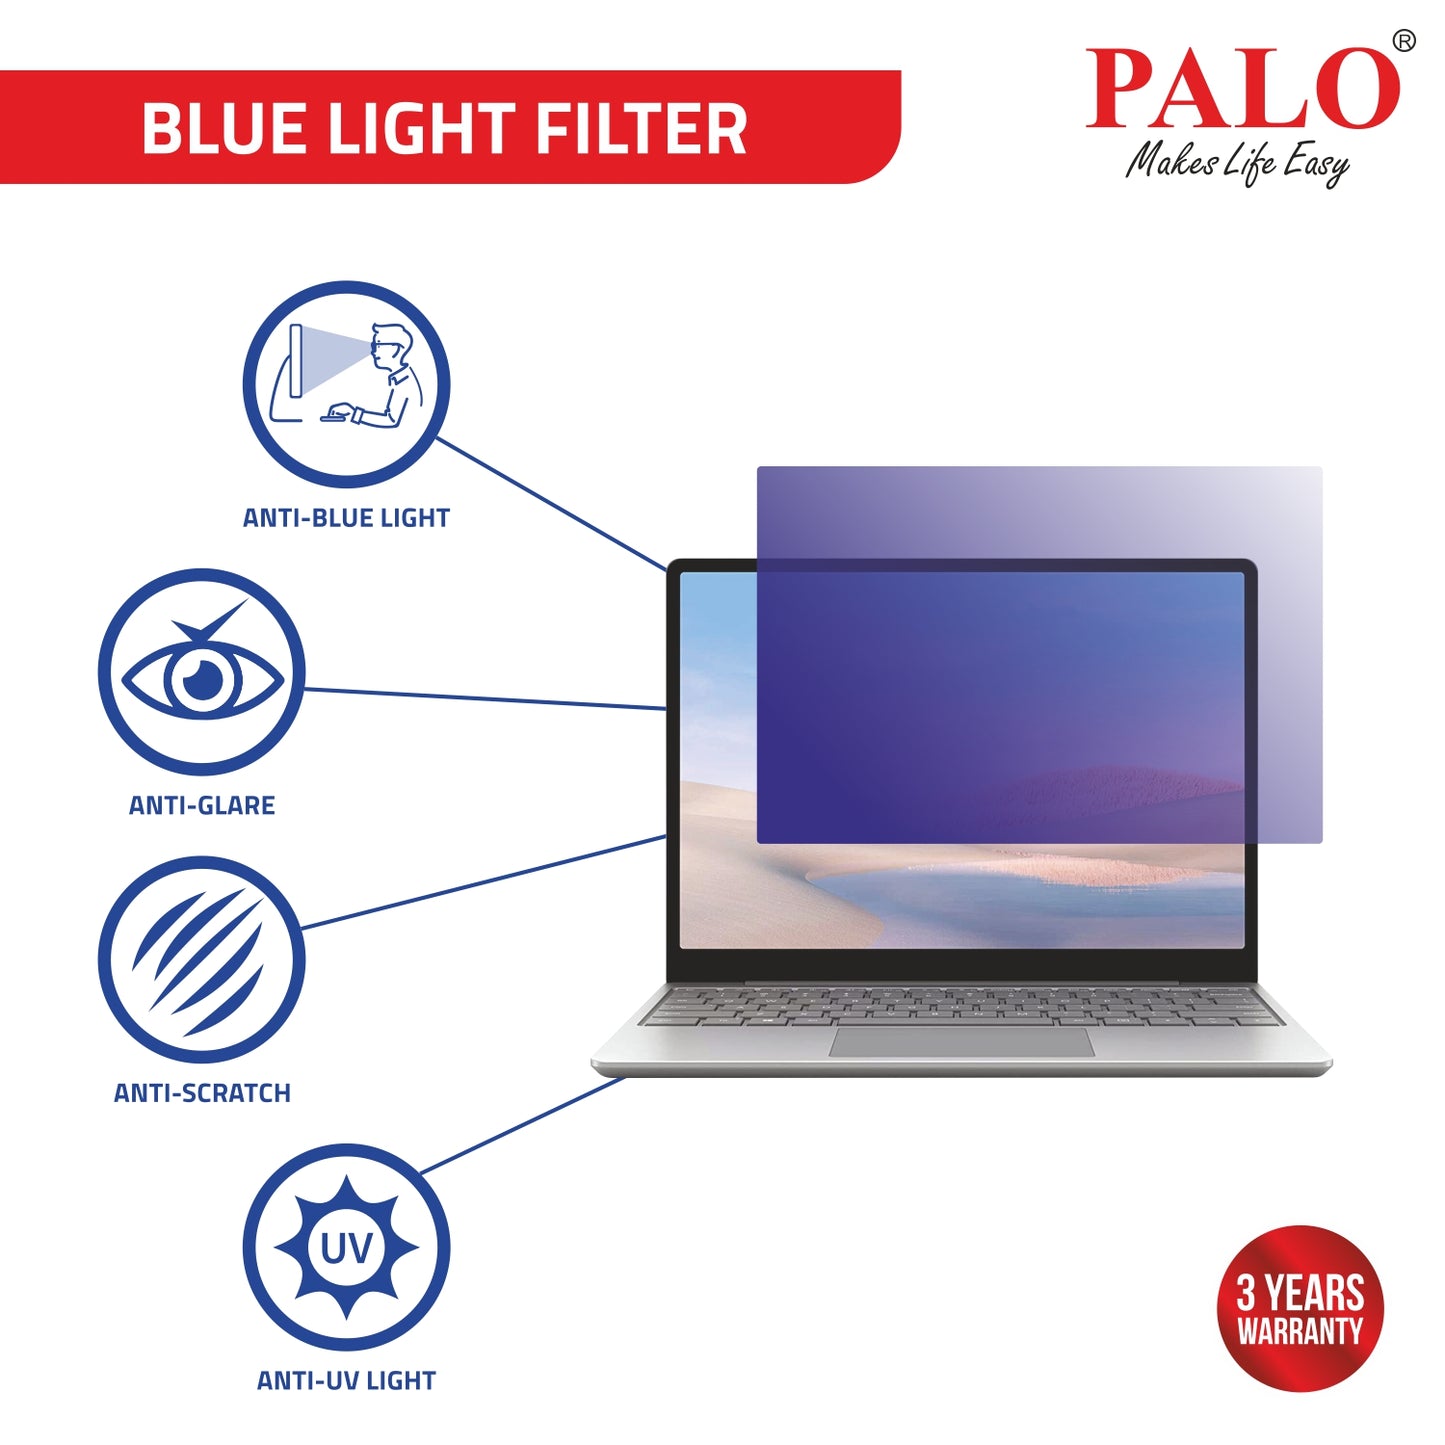 PALO MyDATA Blue Light Filter for Laptops